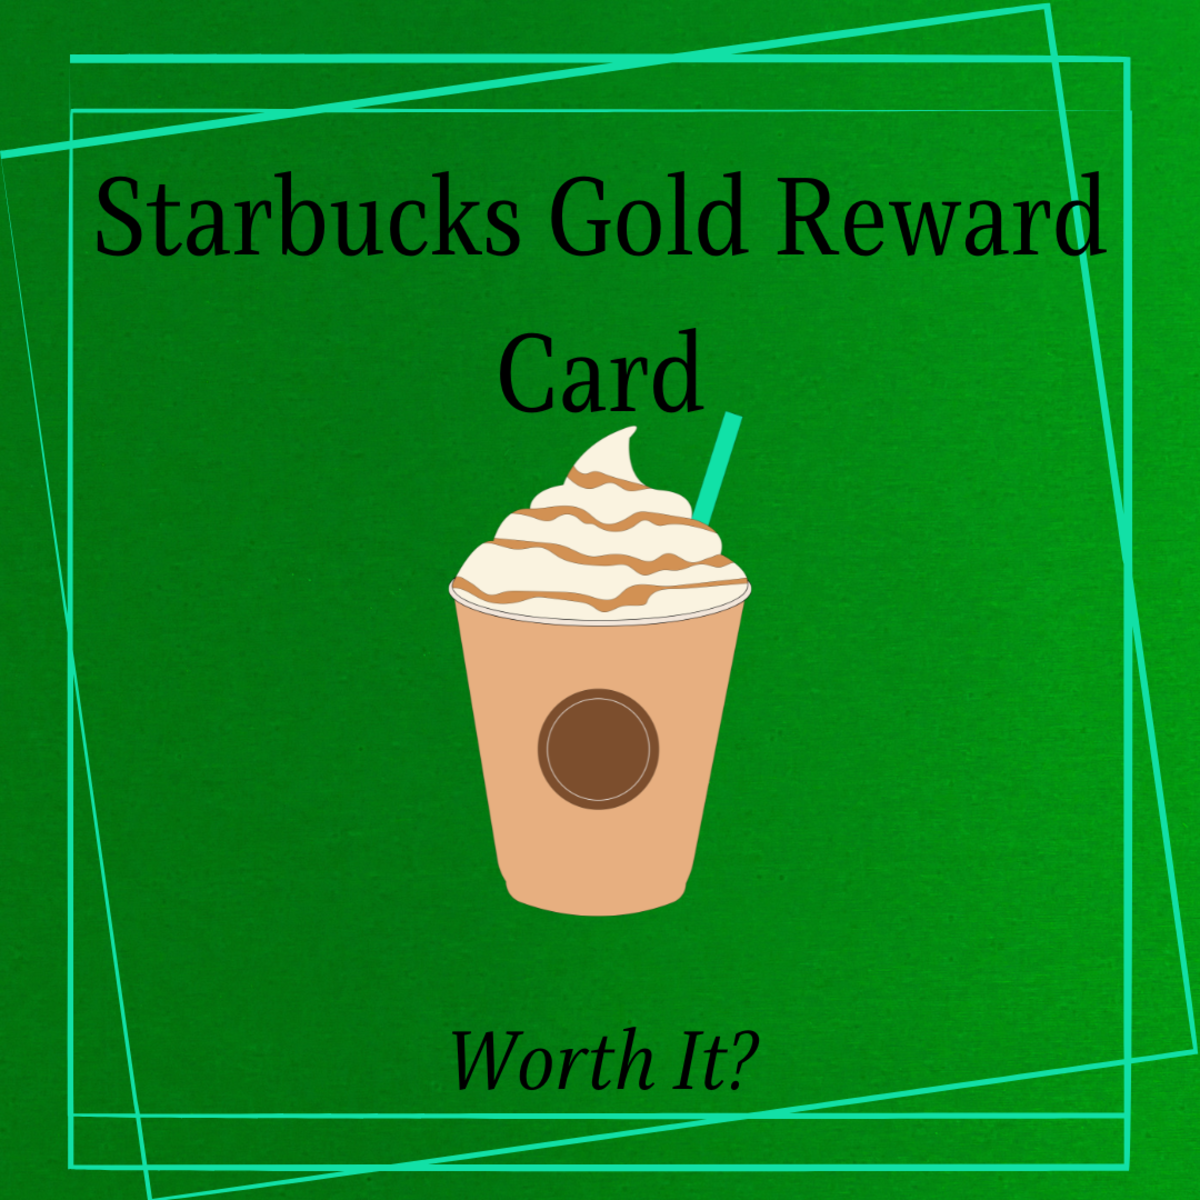 Learn if the Starbucks gold reward card is worth it. 